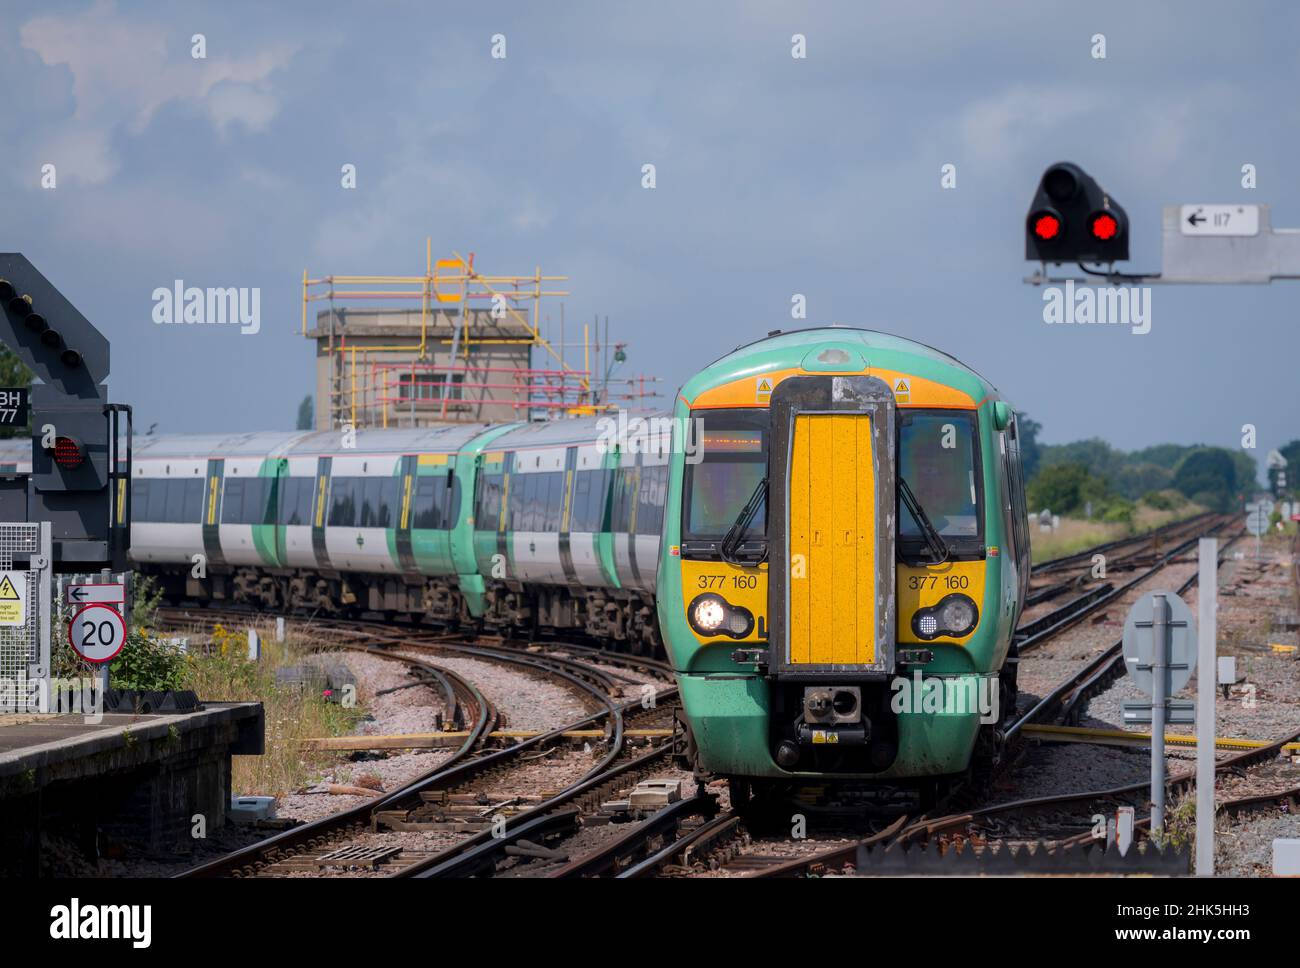 Southern Railway class 377 passenger train  and railway signal, England. Stock Photo